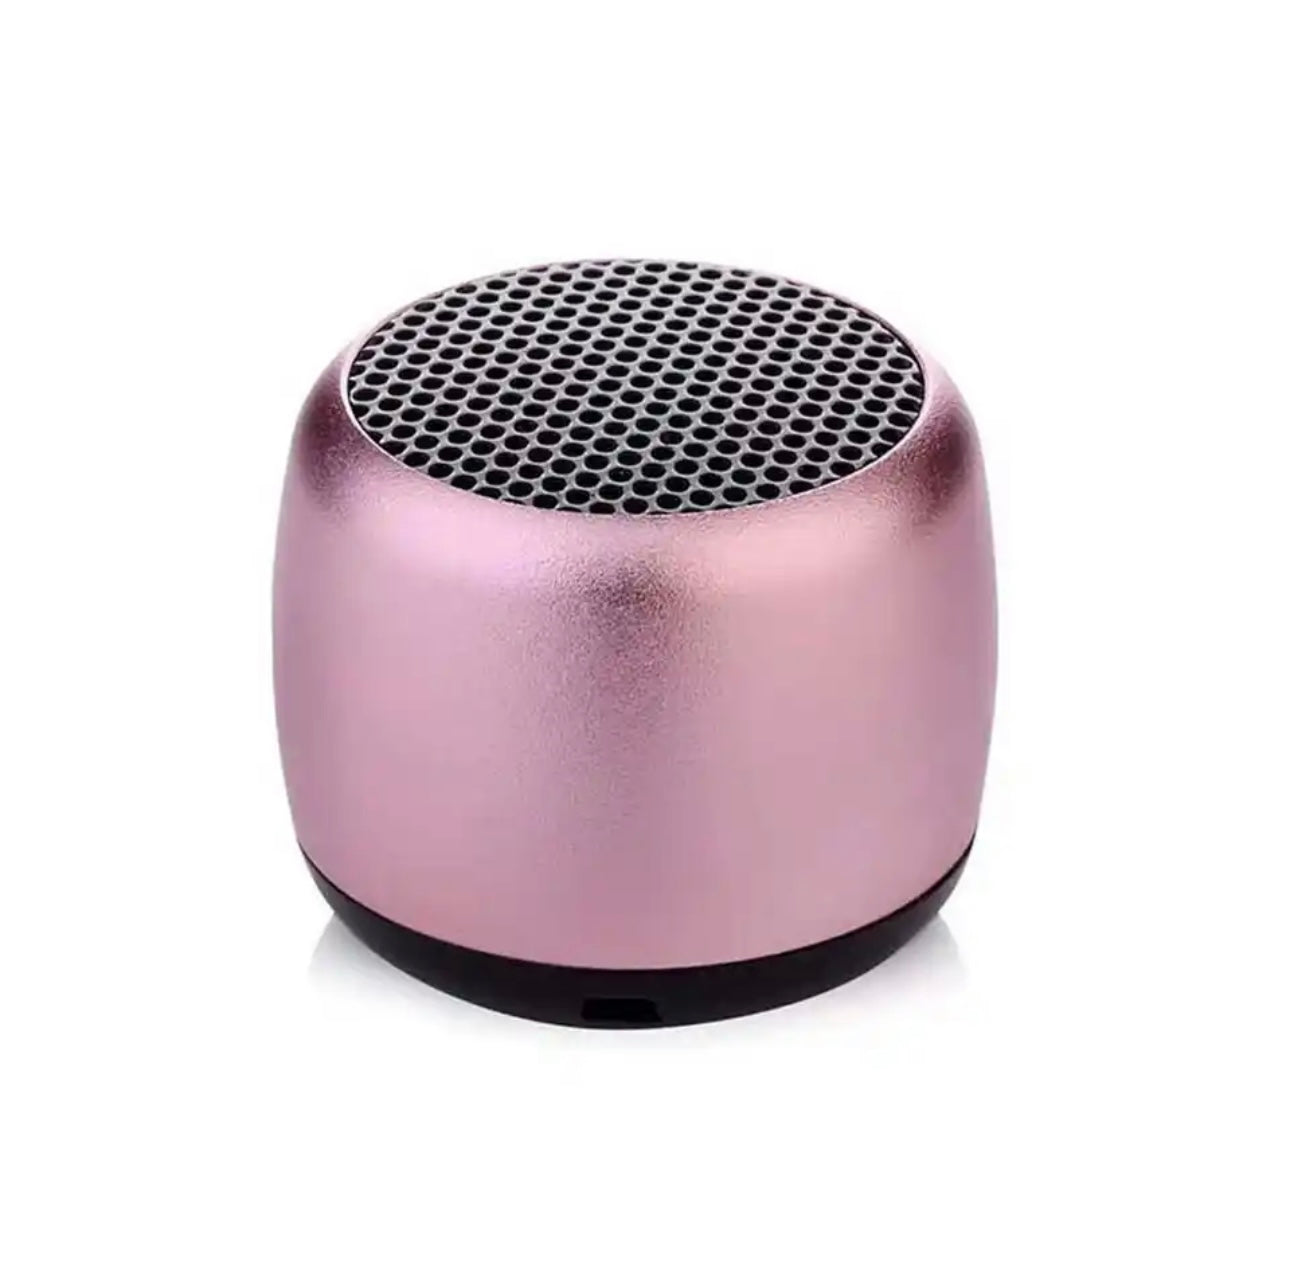 Bluetooth speaker charm